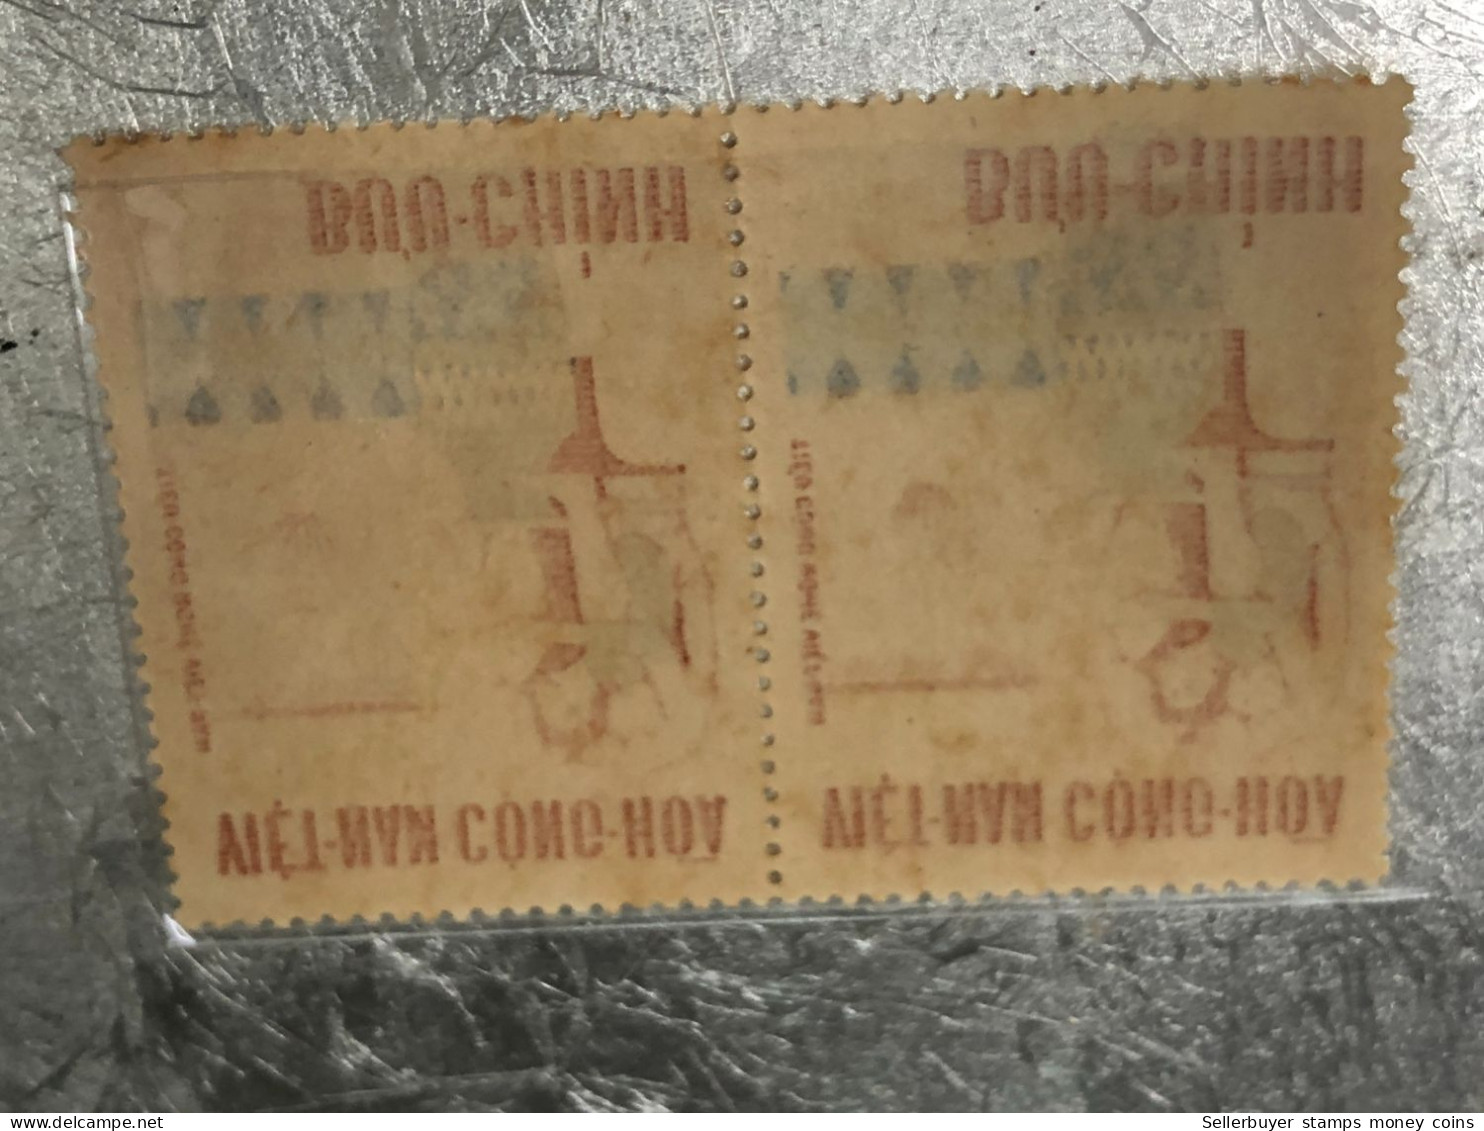 SOUTH VIETNAM Stamps(1967-ARTISANAT-3d) Piled ERROR(imprinted)-2 STAMPS Vyre Rare - Vietnam